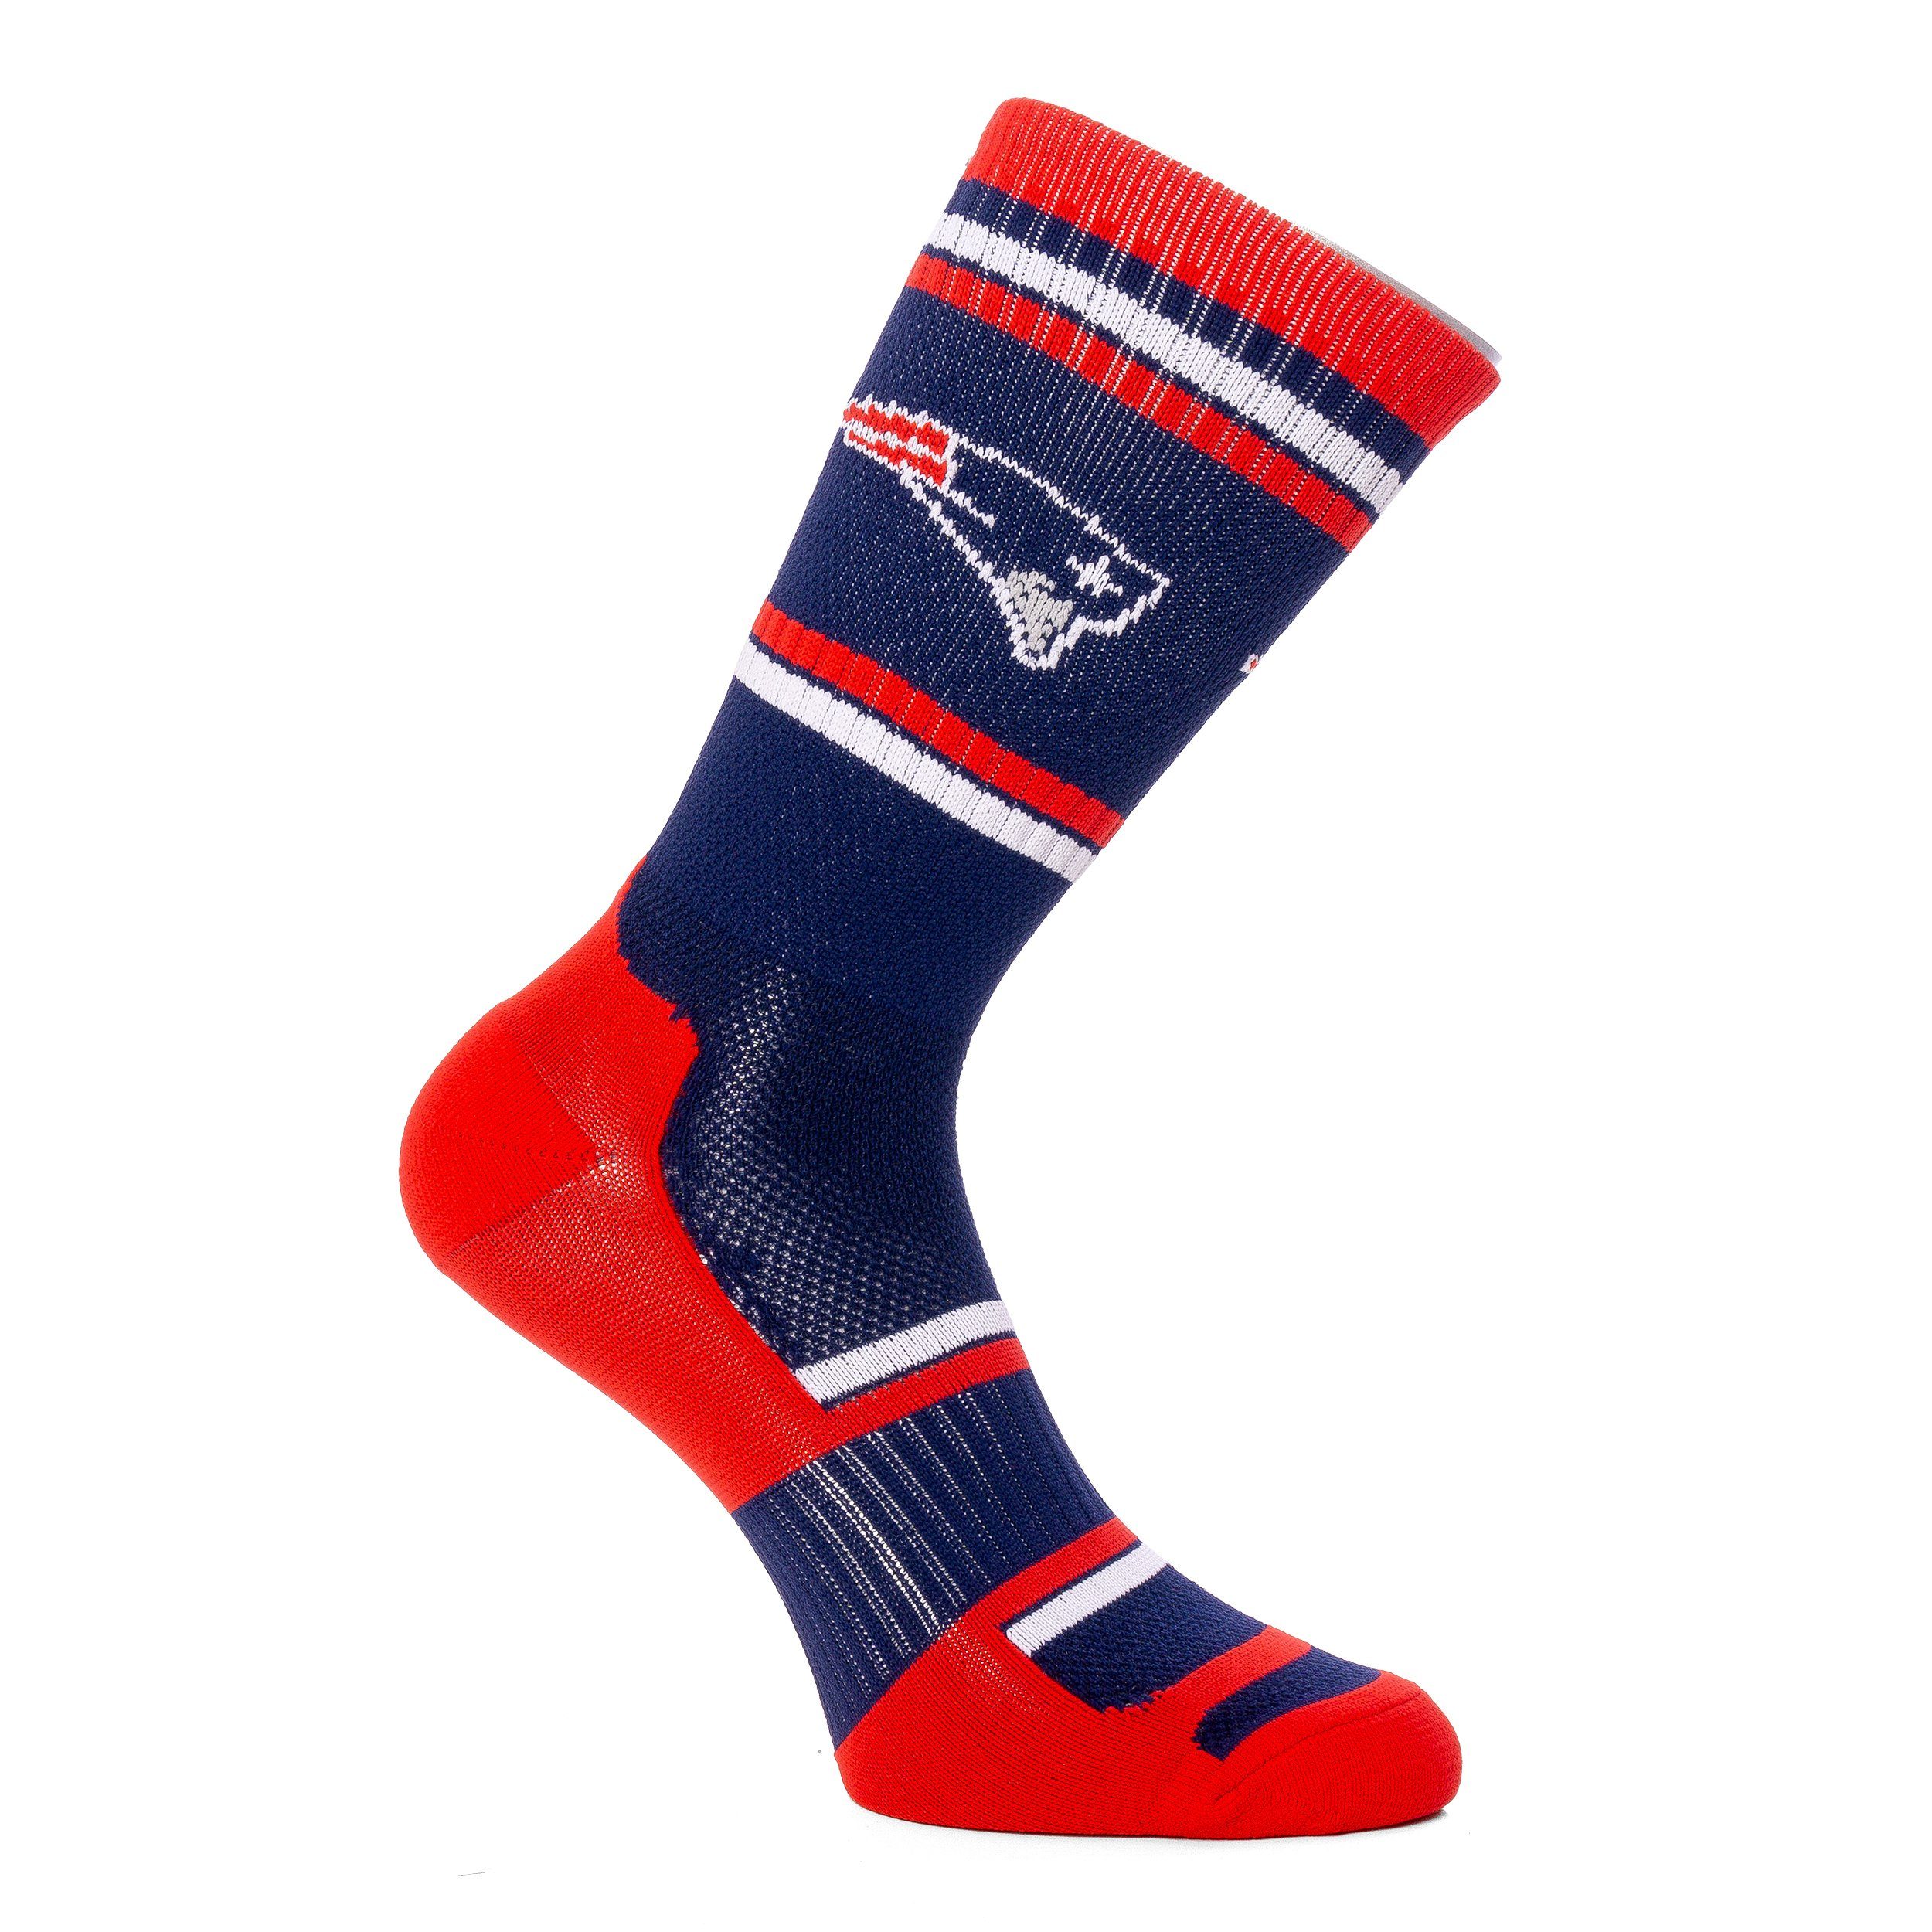 Fanatics Freizeitsocken Socken NFL New England Patriots Performe, G L, F navy (1-Paar)